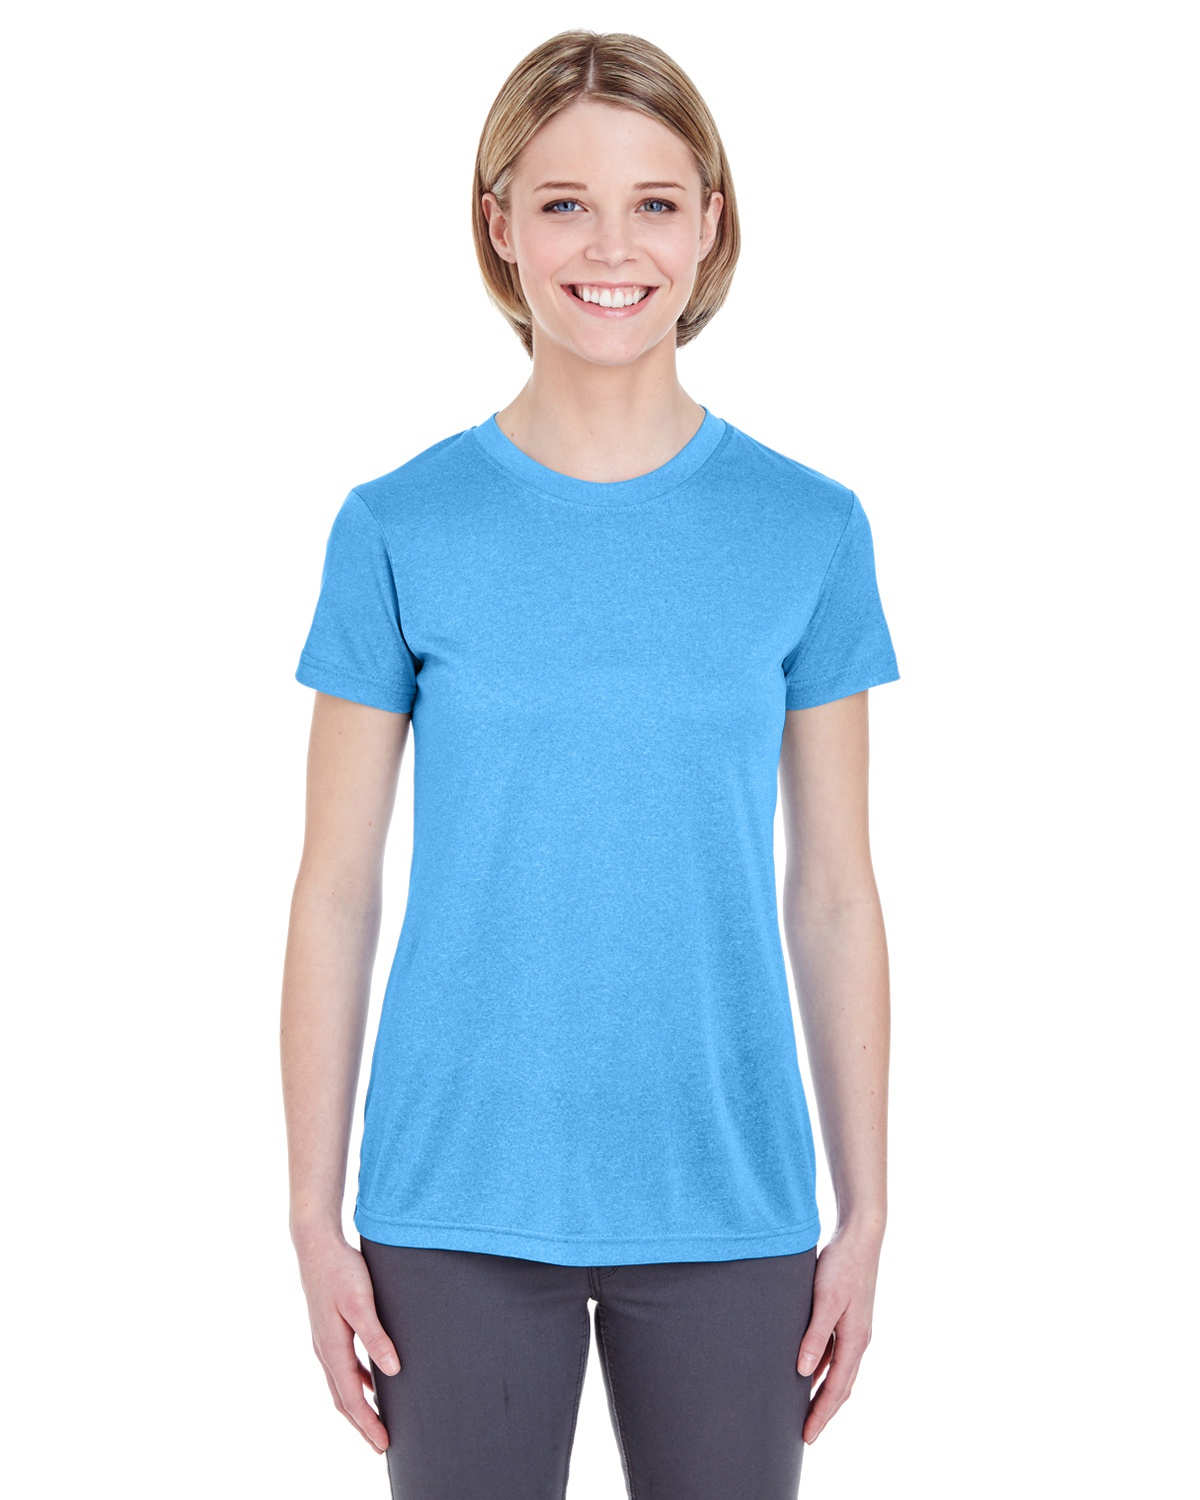 'UltraClub 8619L Ladies Cool & Dry Heathered Performance T-Shirt'